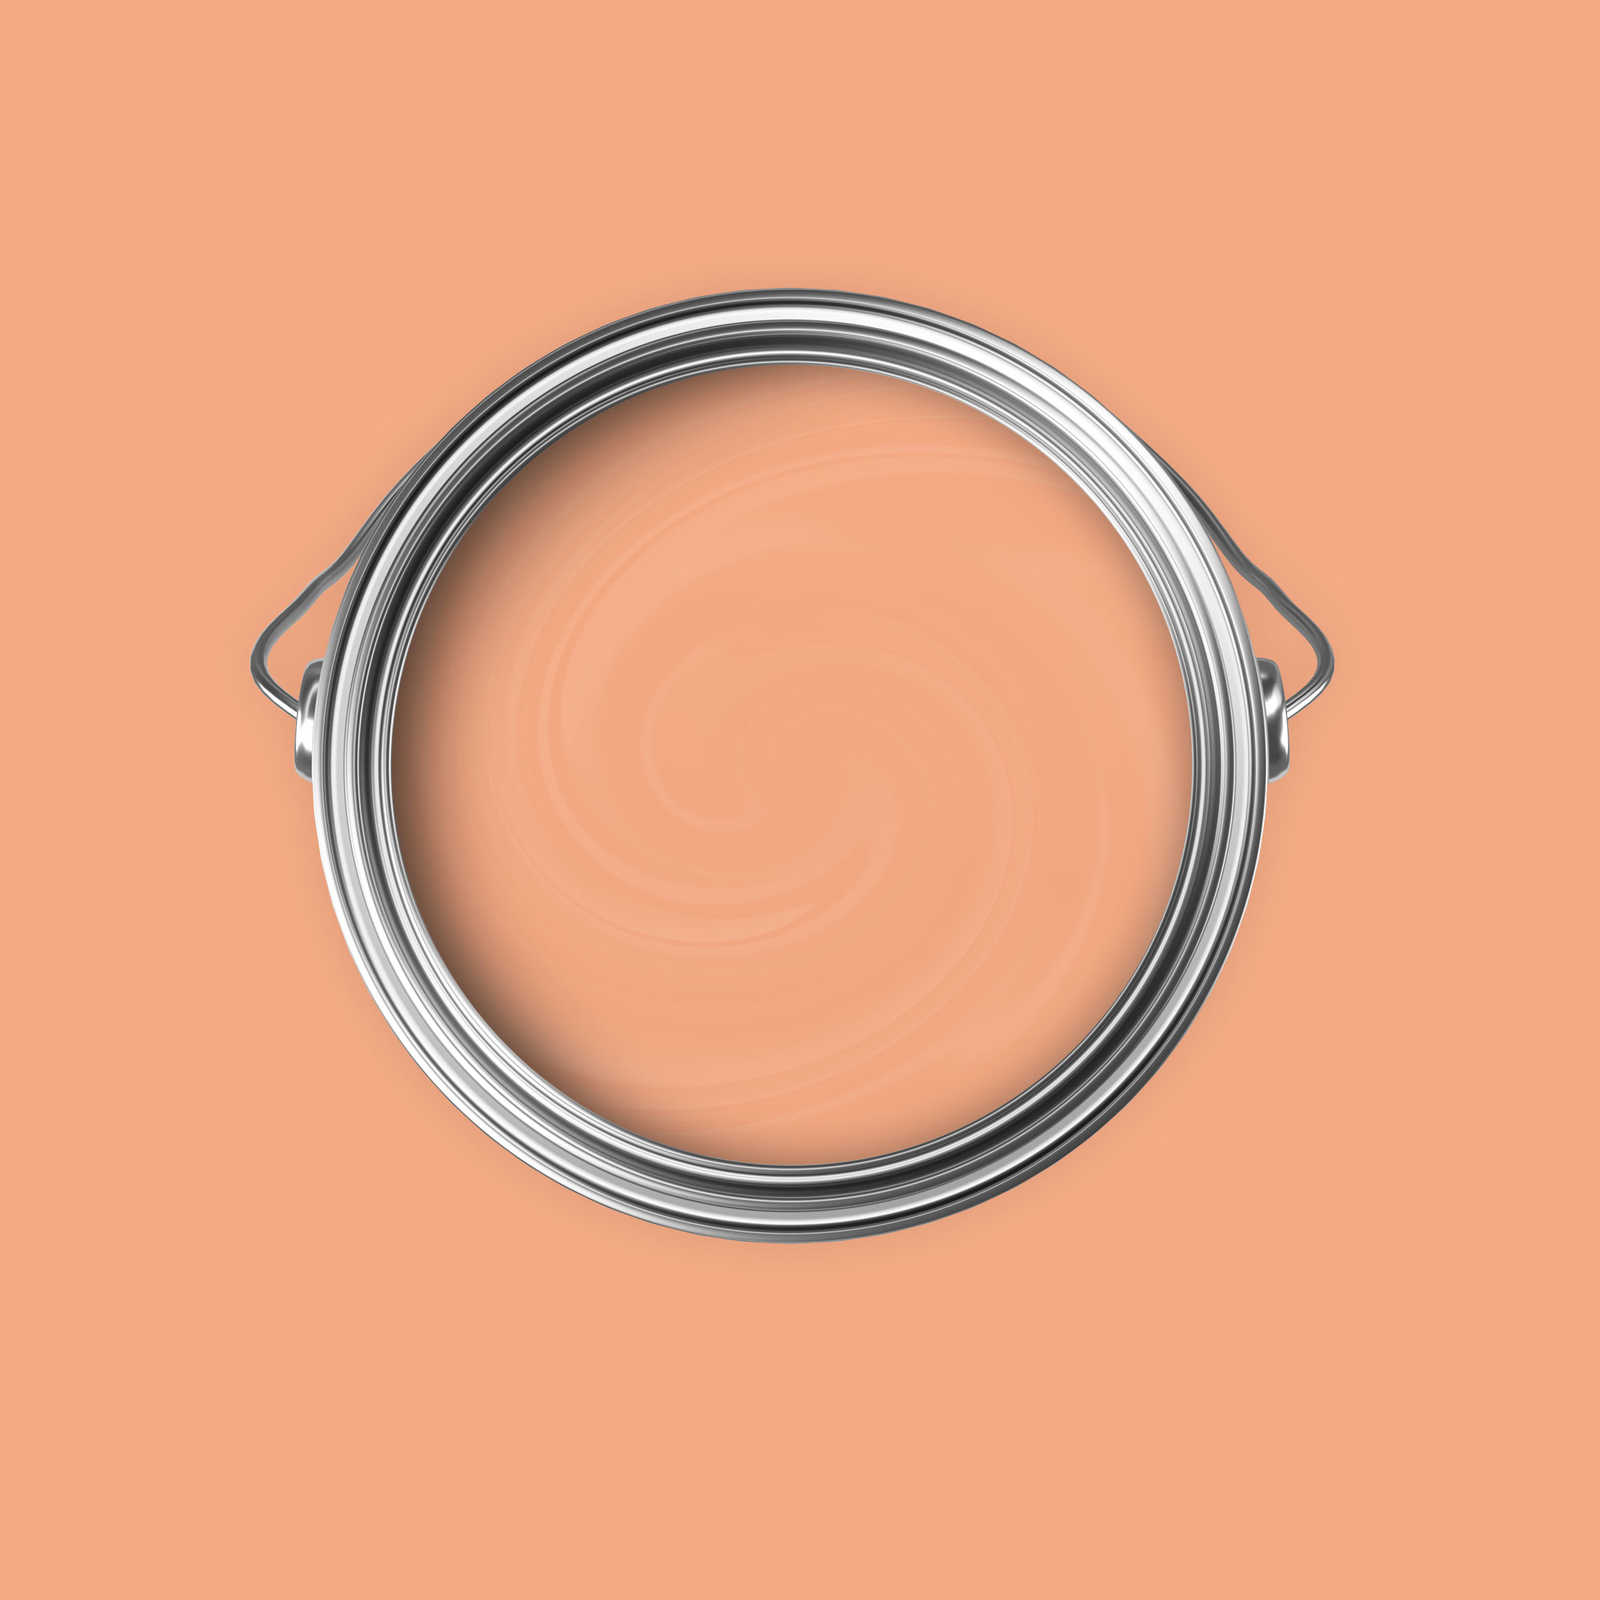             Premium Wall Paint Friendly Salmon »Active Apricot« NW913 – 5 litre
        